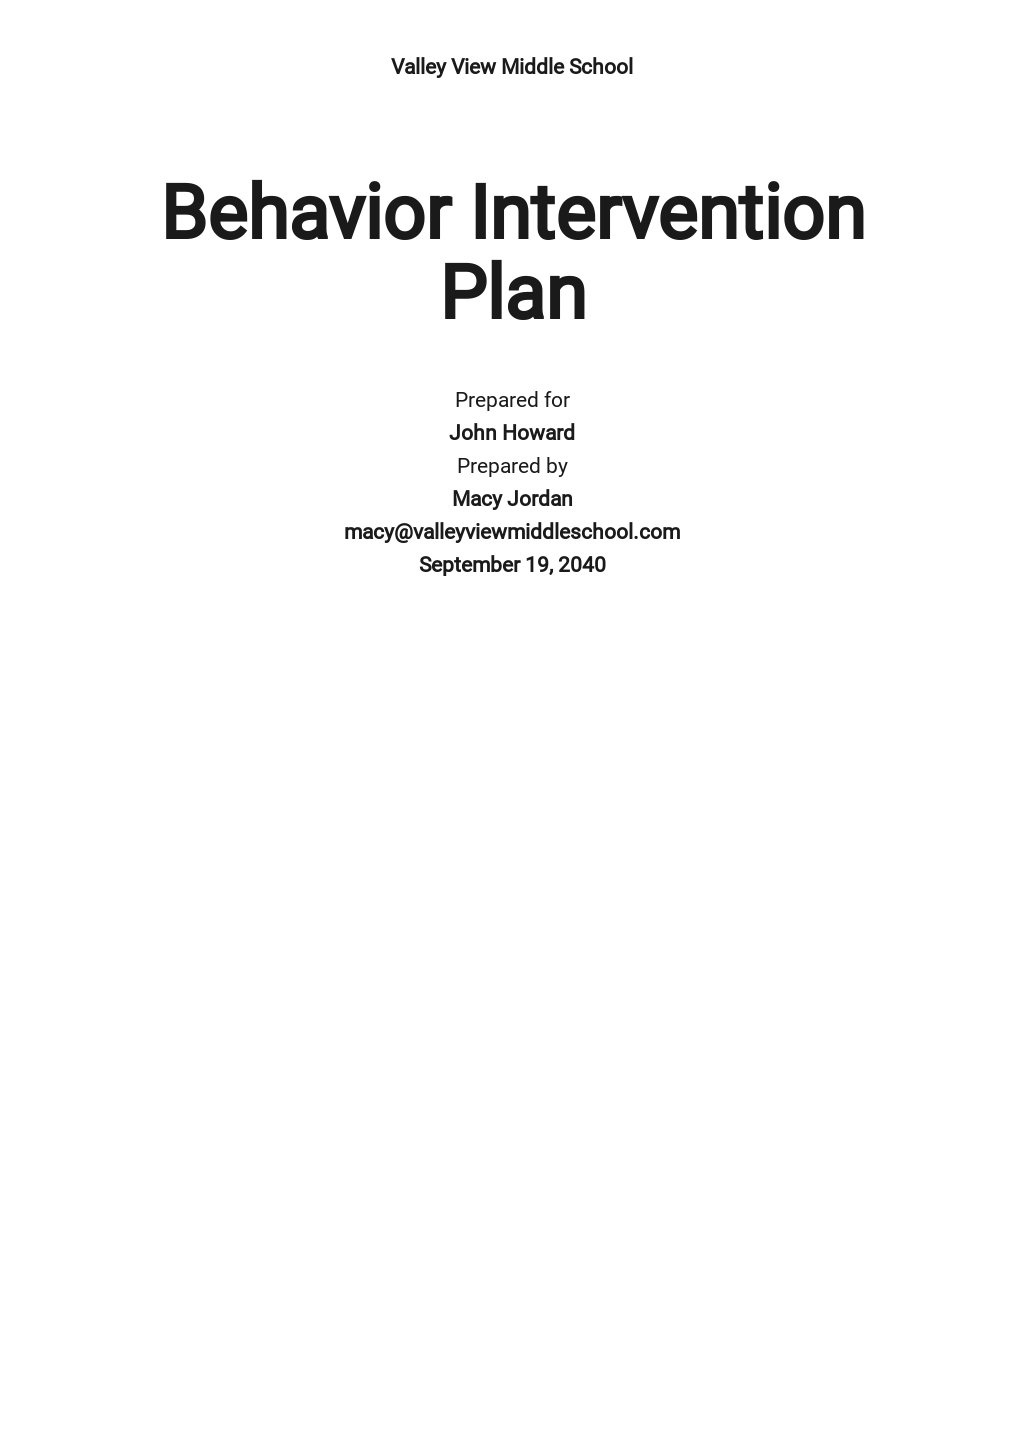 Behavior Intervention Plan Template.jpe